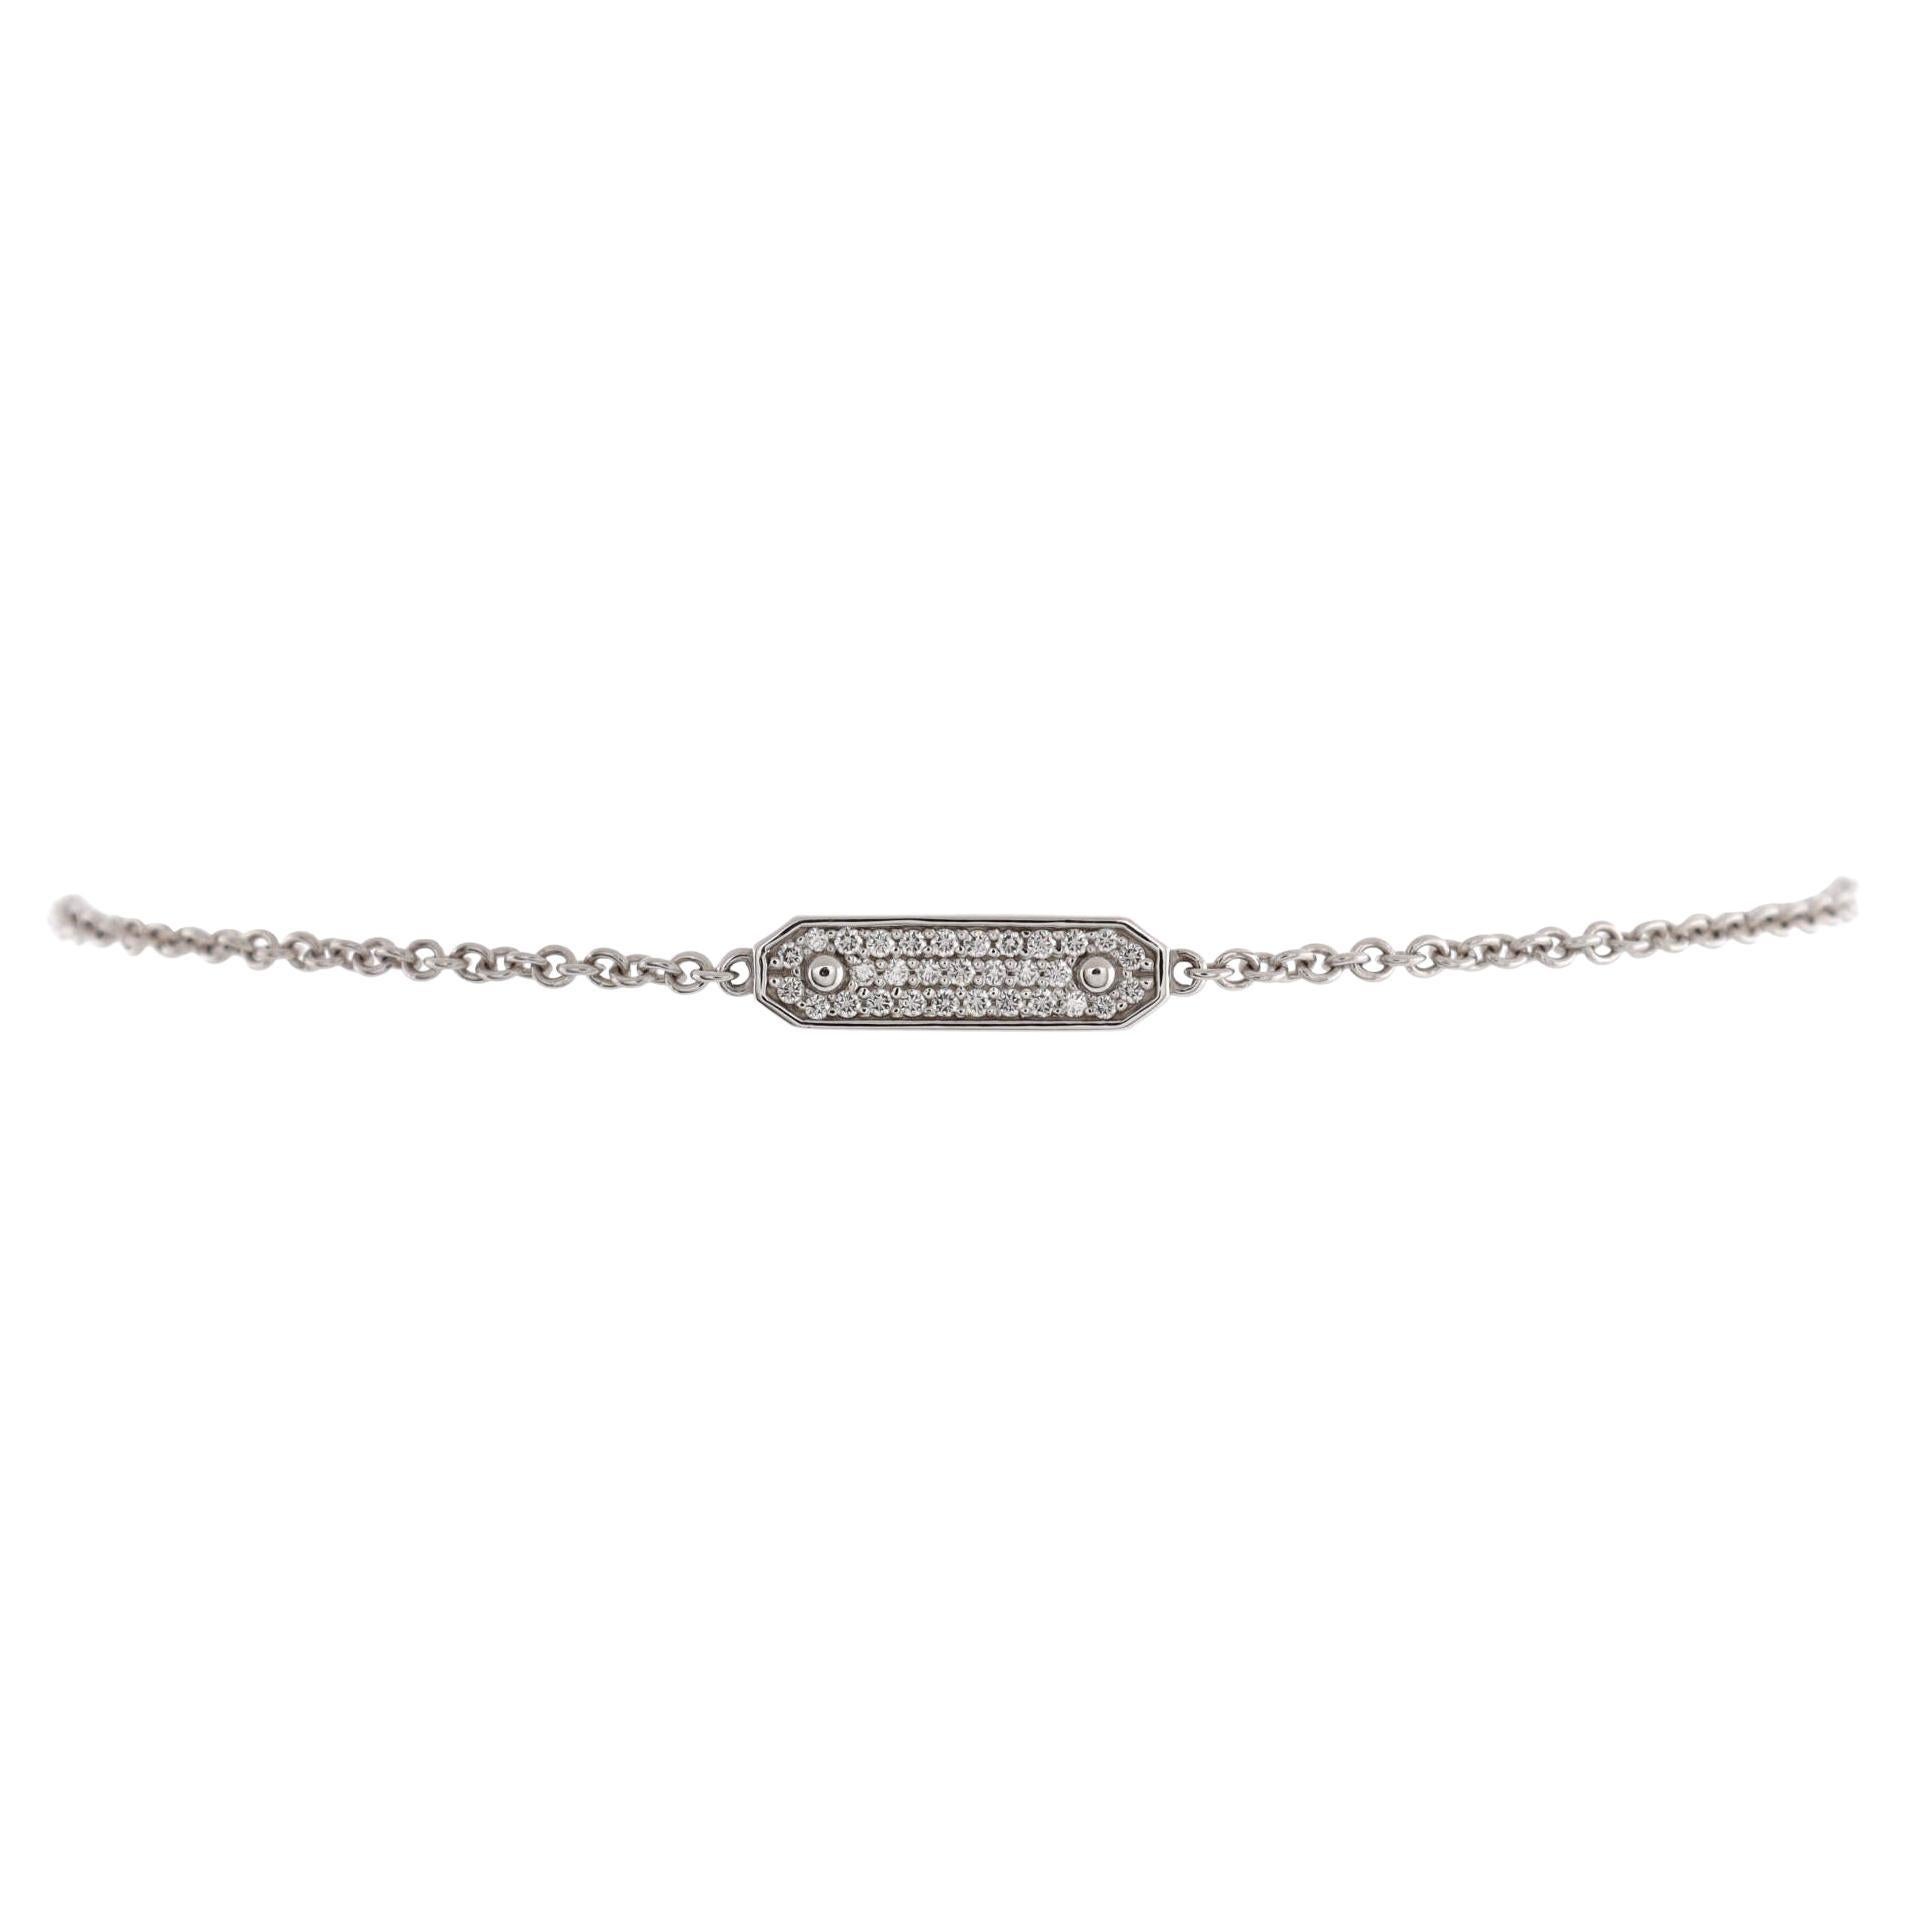 Tiffany & Co. Tag Chain Bracelet 18k White Gold and Diamonds